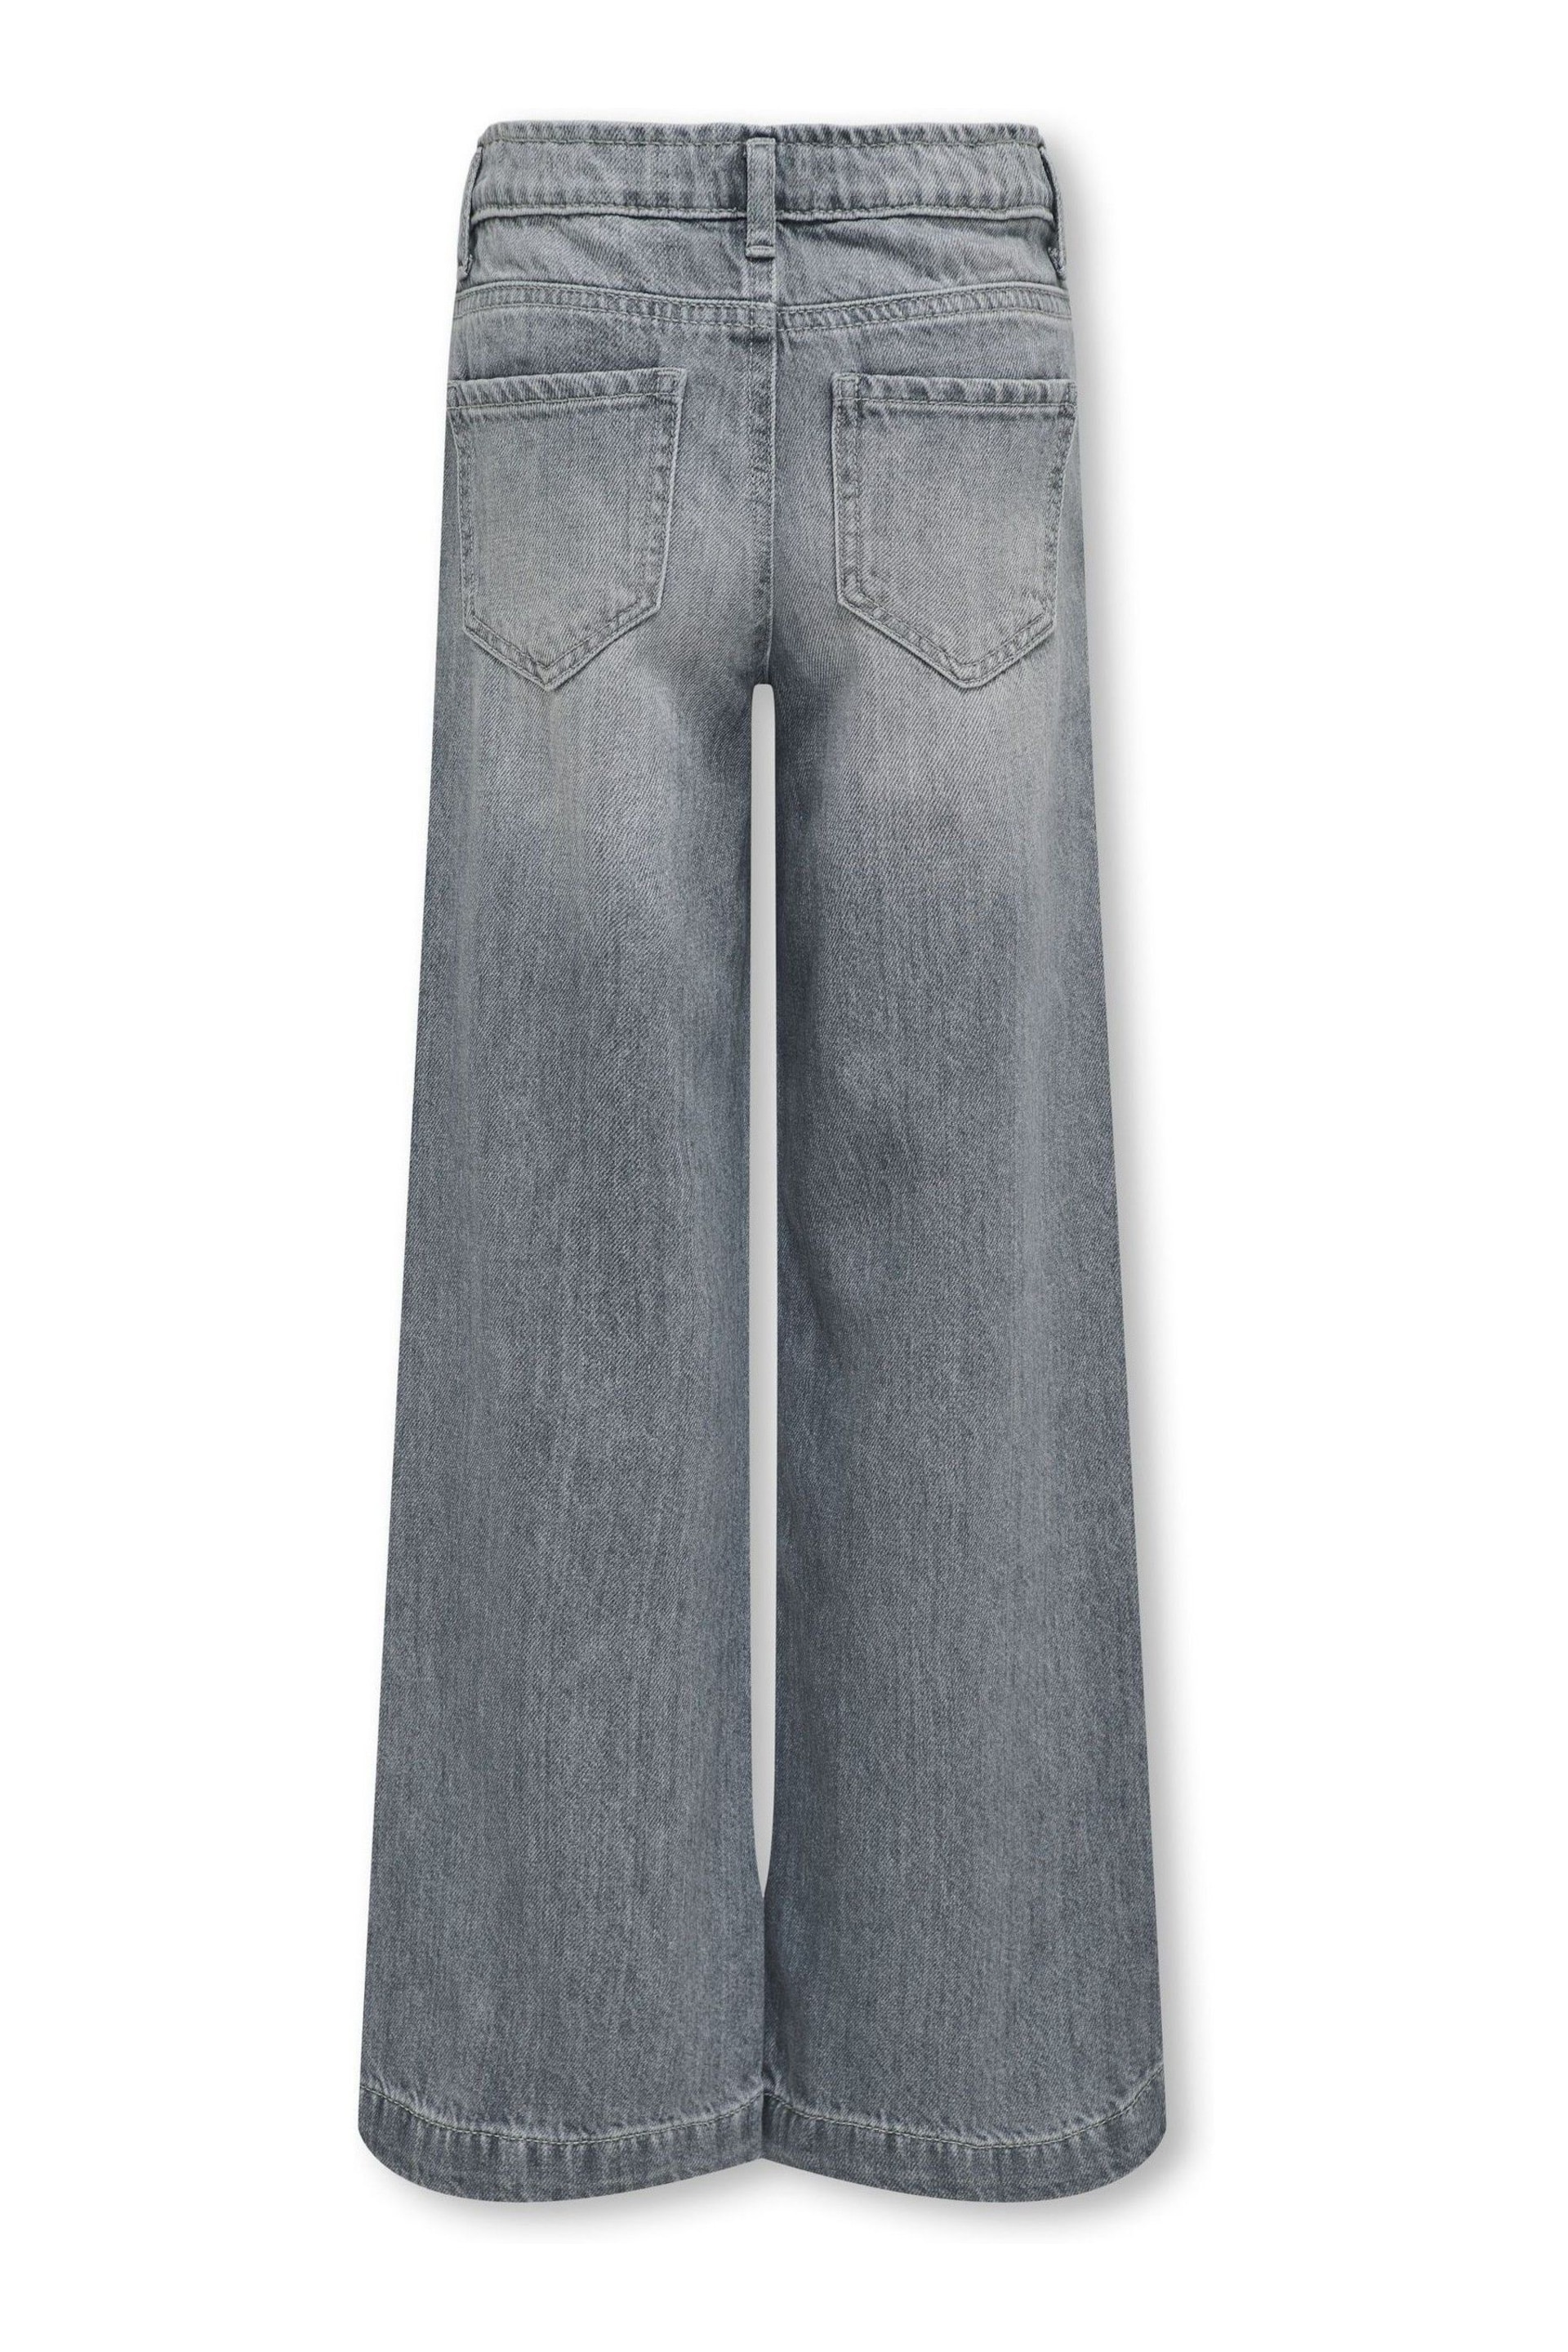 ONLY KIDS Grey Wide Leg Adjustable Waist Jeans - Image 2 of 2